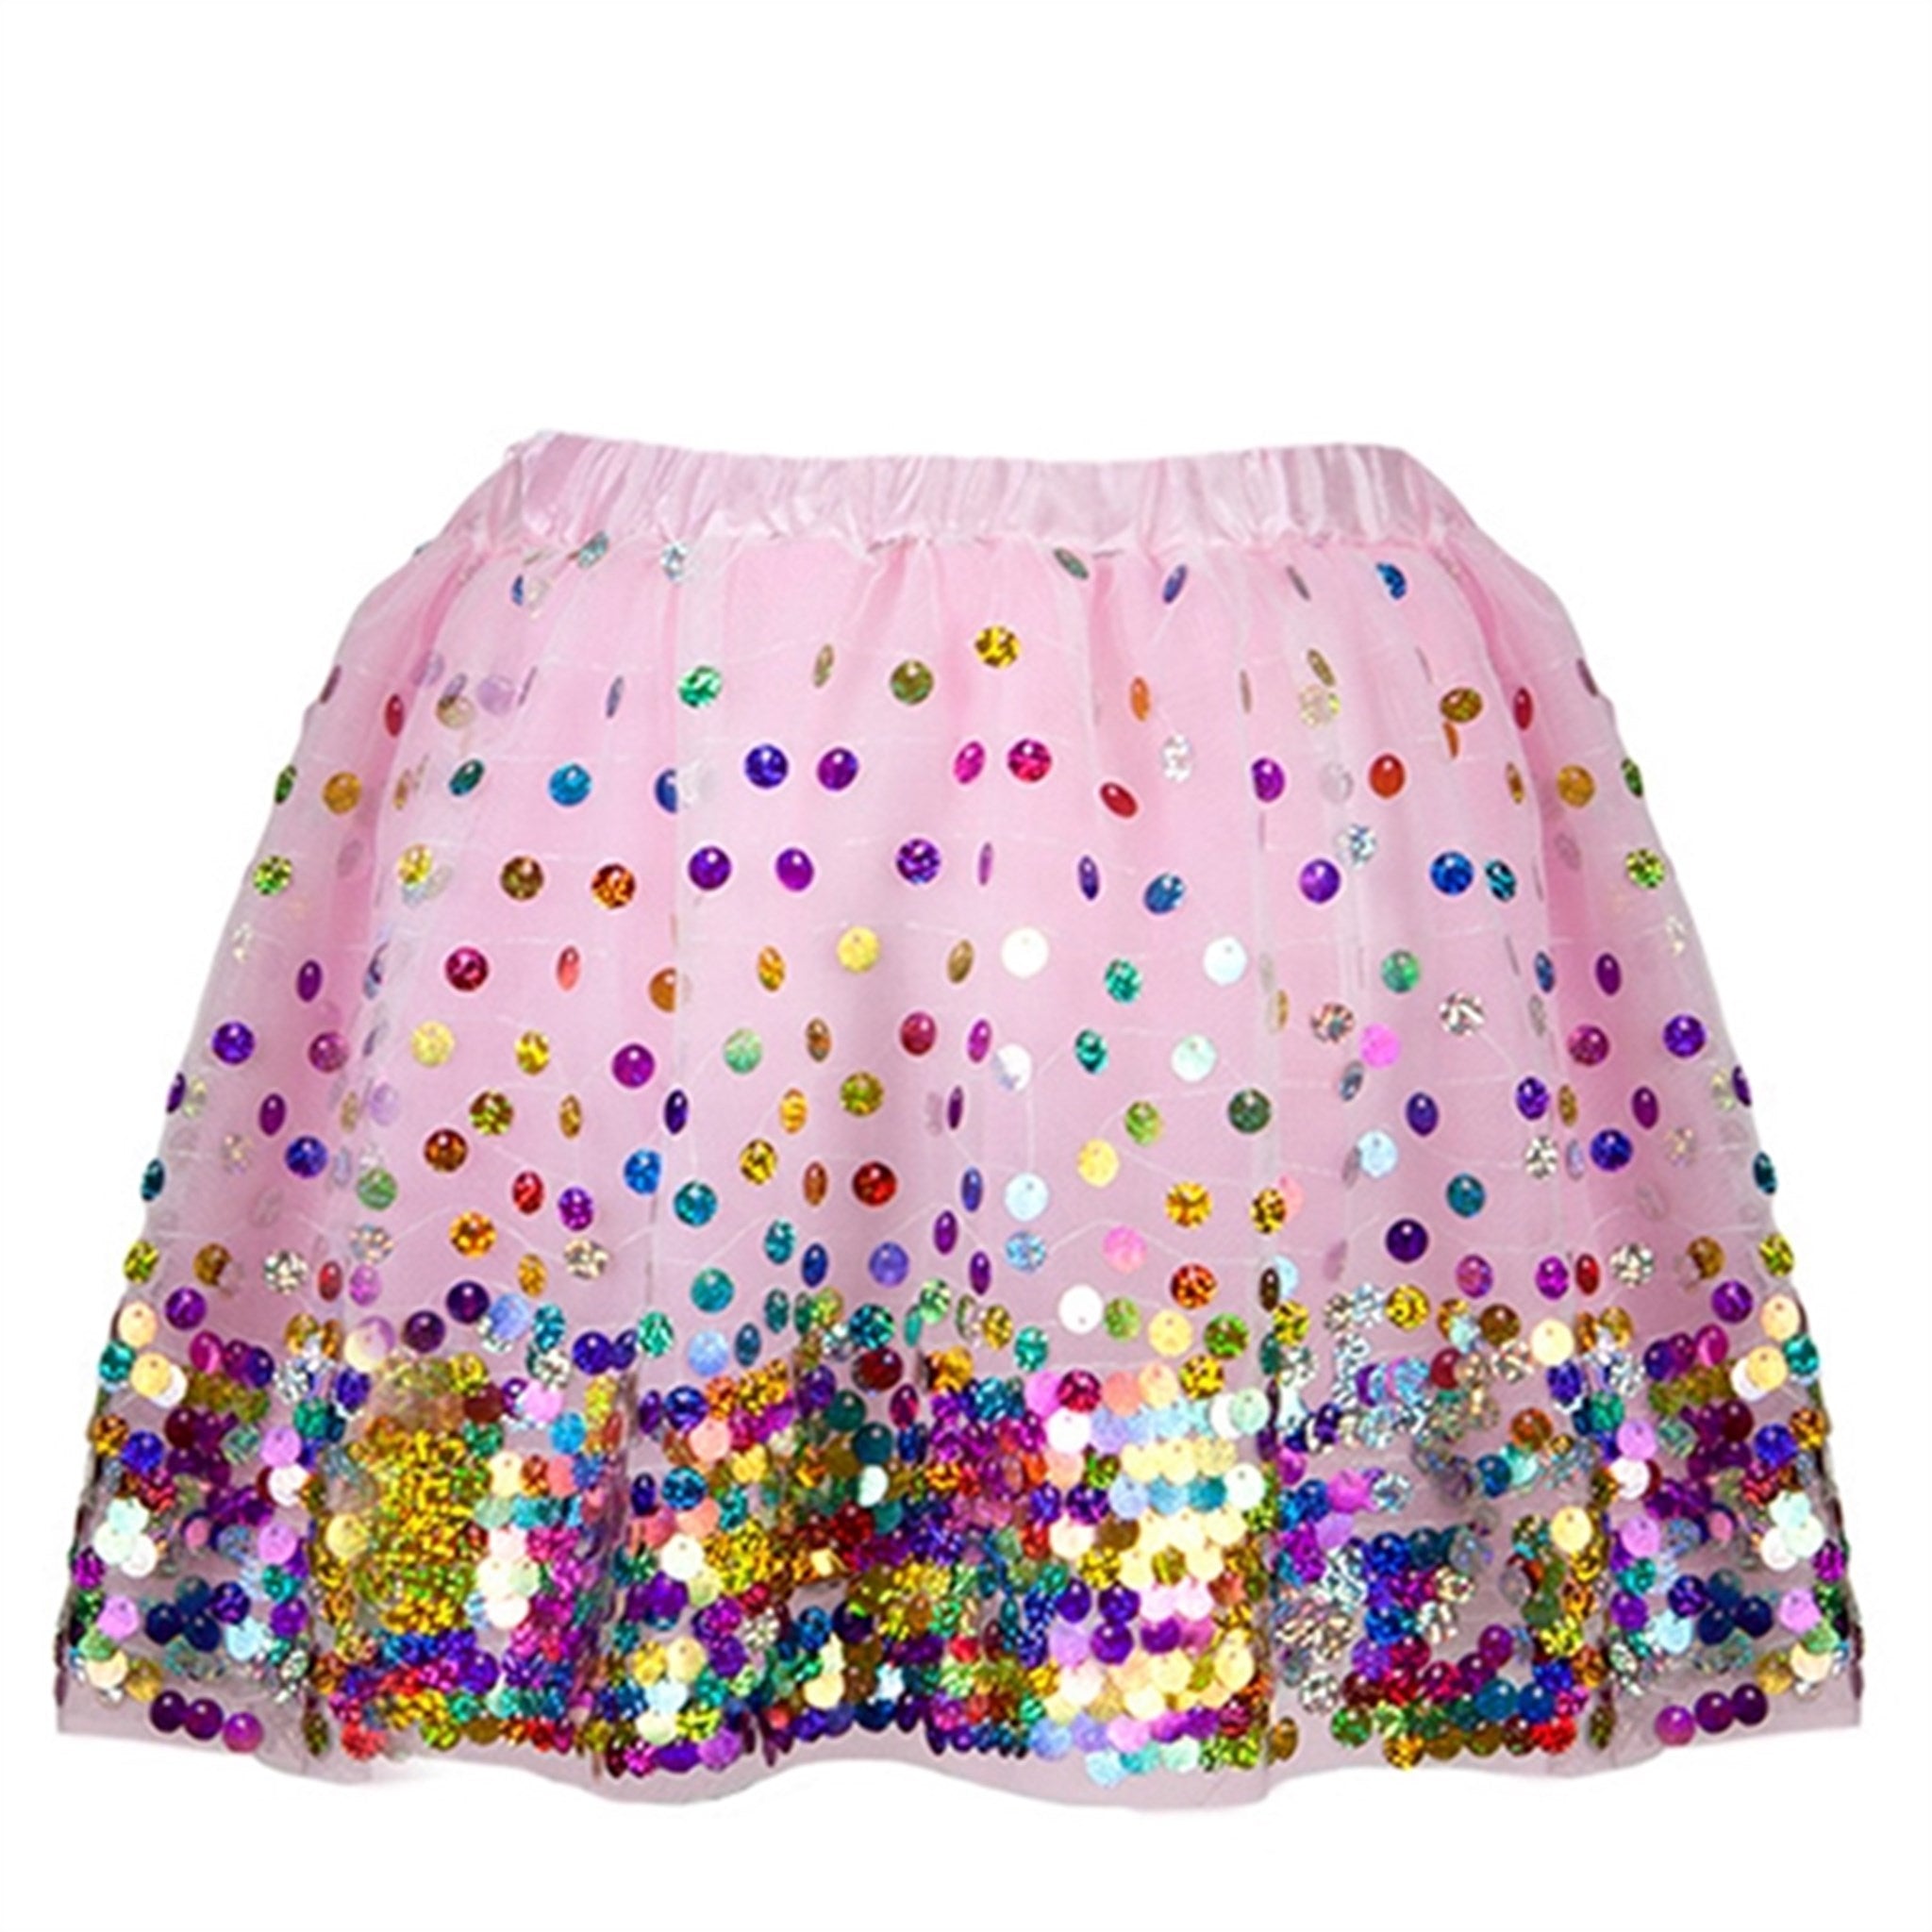 Great Pretenders Party Fun Sequin Skirt